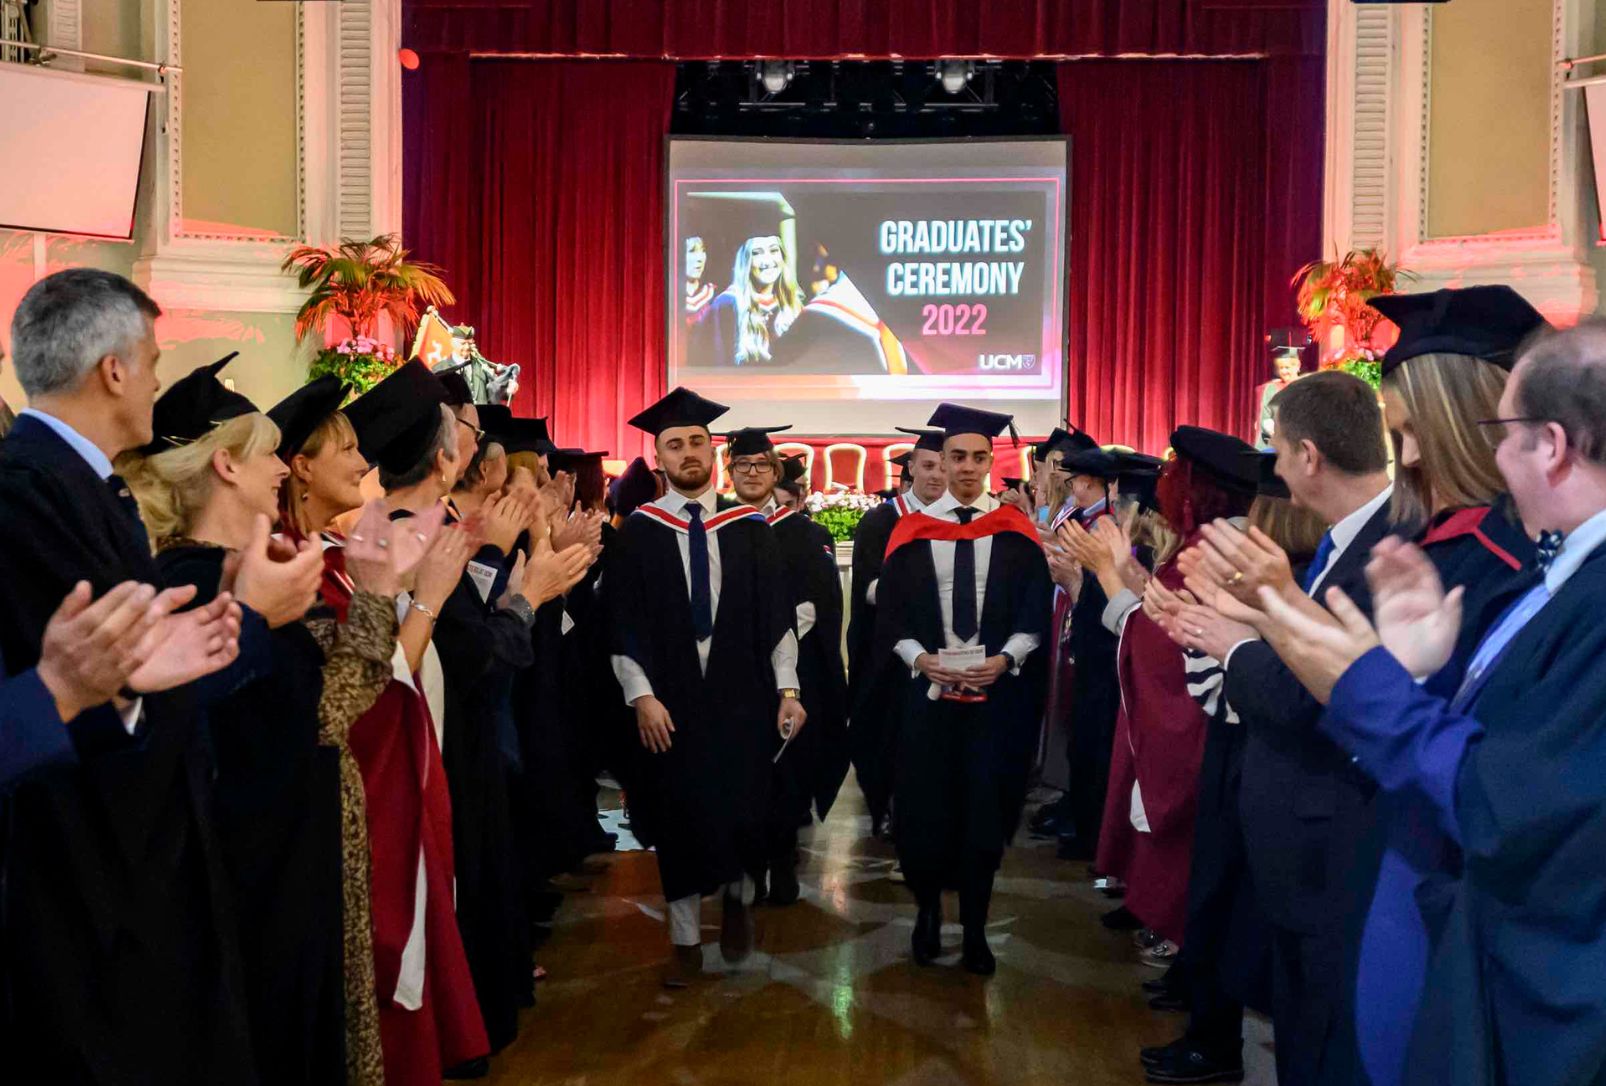 Graduates' Ceremony Website News Image